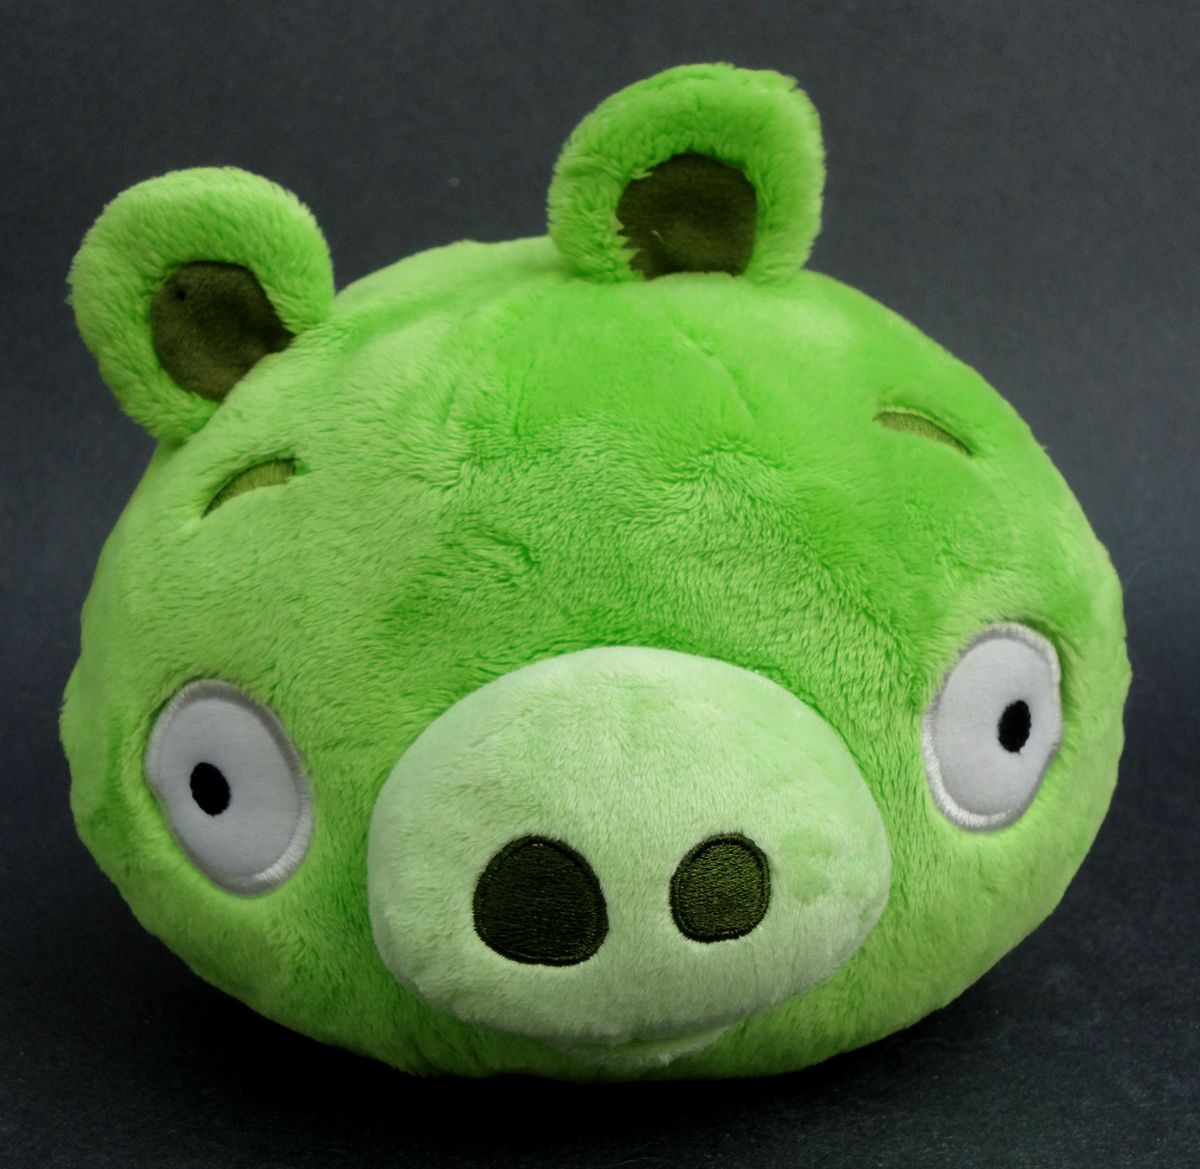  Green Pig Bad Piggies Commonwealth Plush Toy 6 Tall Rovio 2010